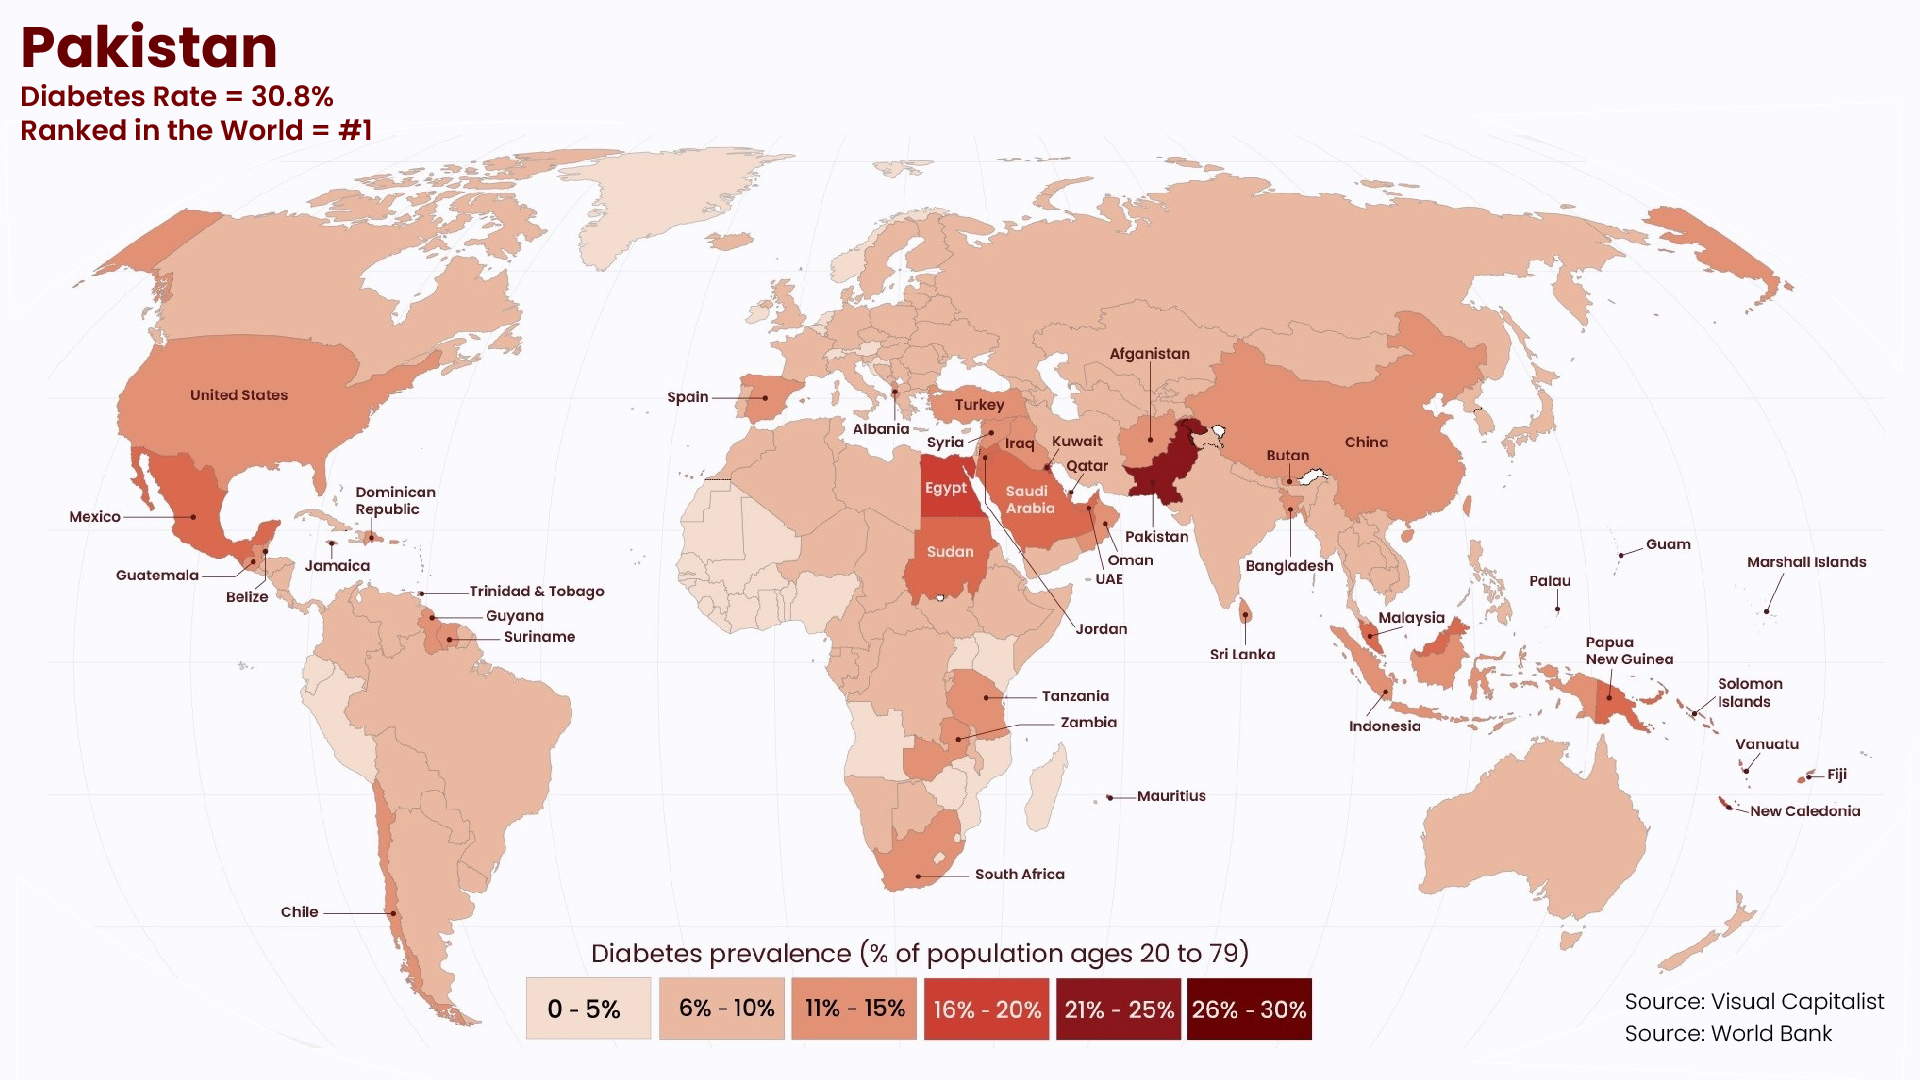 Global Distribution of Diabetes